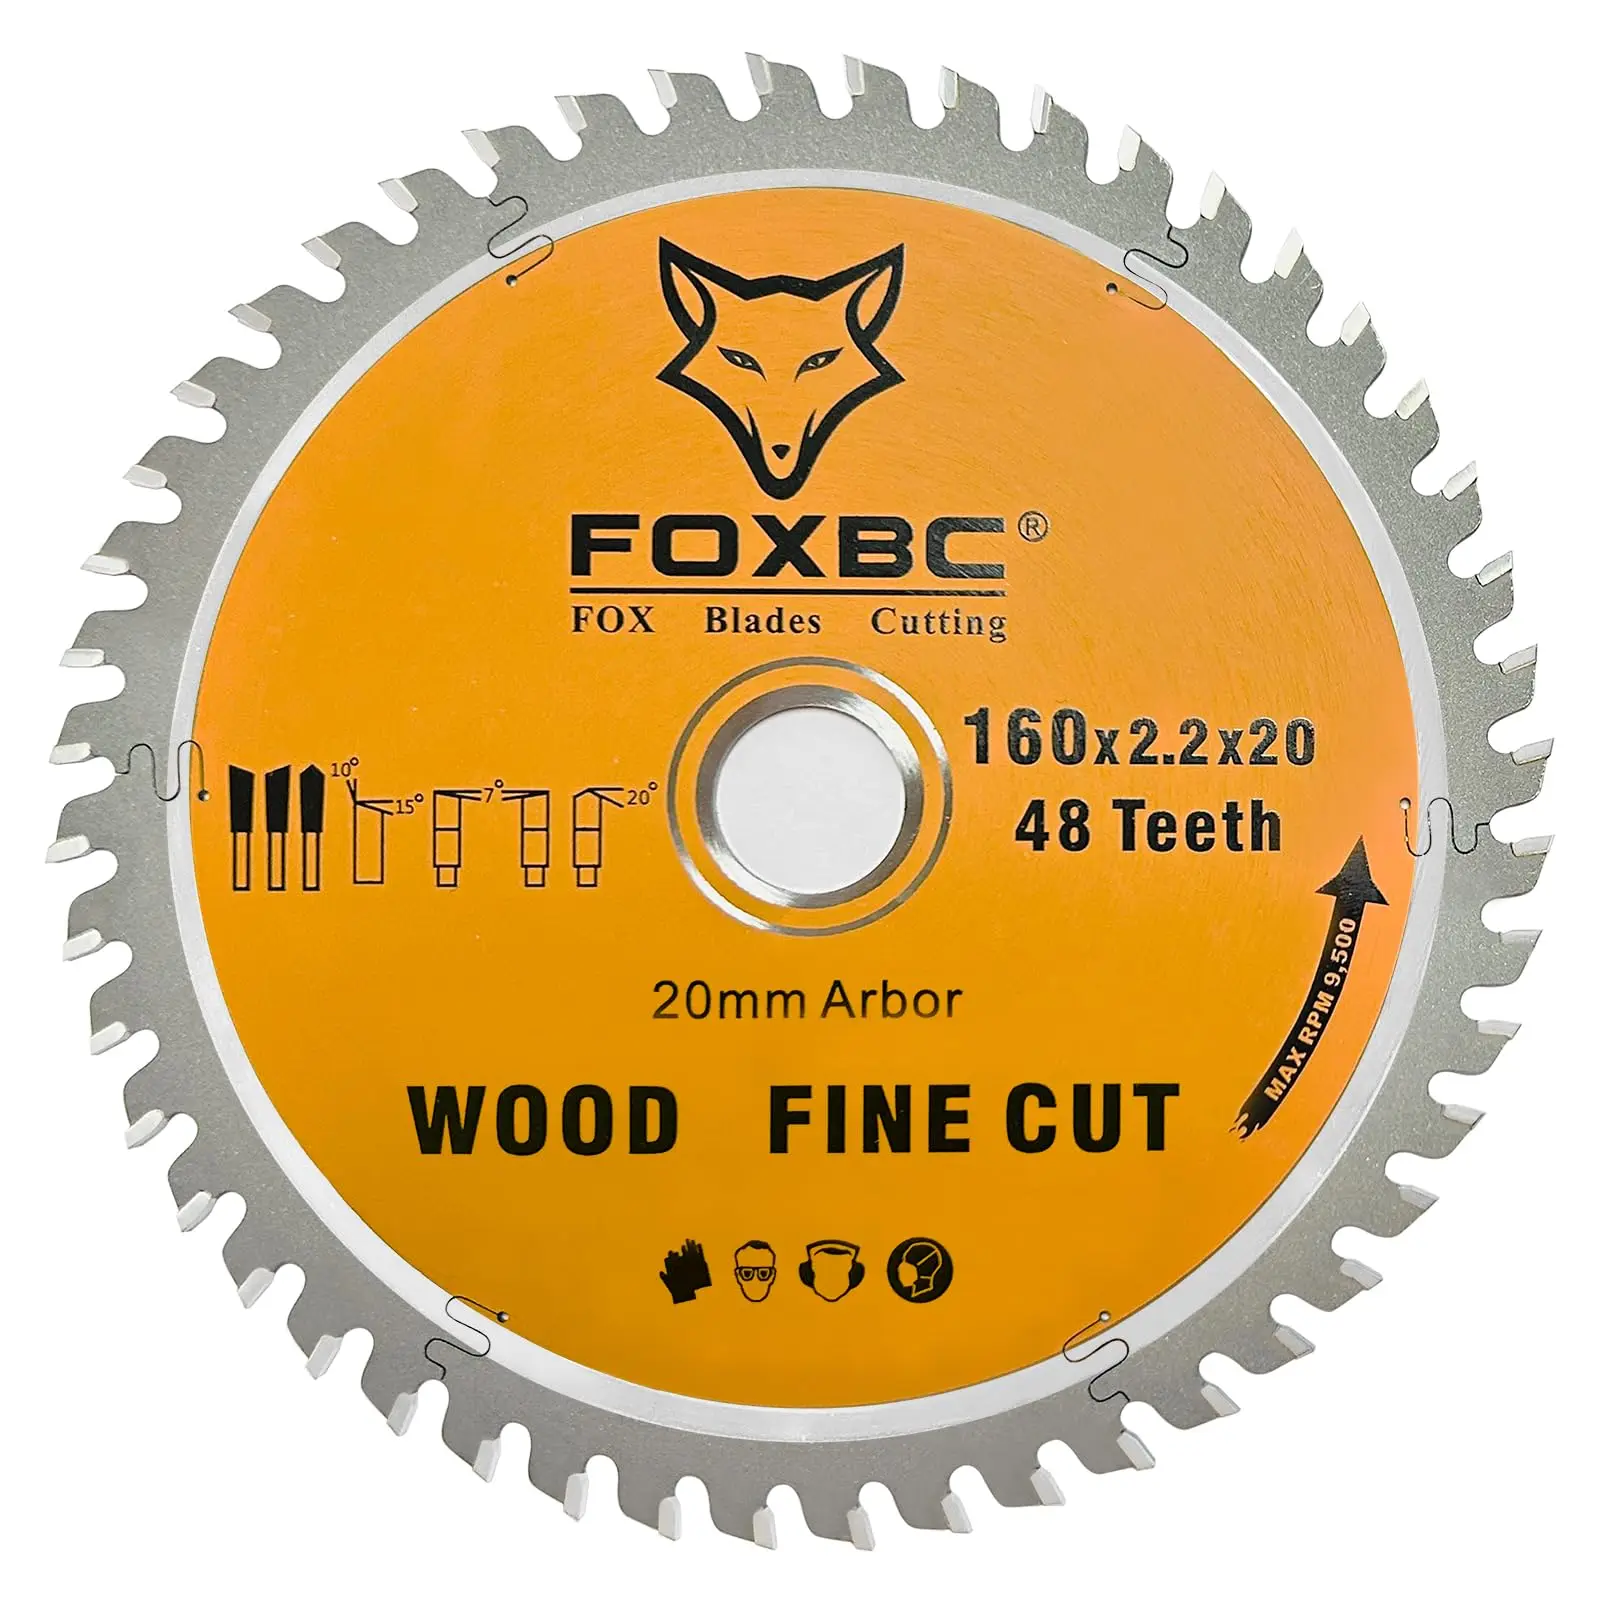 foxbc-495377トラックソーブレード160x22x20mm-48-t木工用ファインカット55、tsc-55、atf-55、ap-55、dewalt-dws520k-1pcs